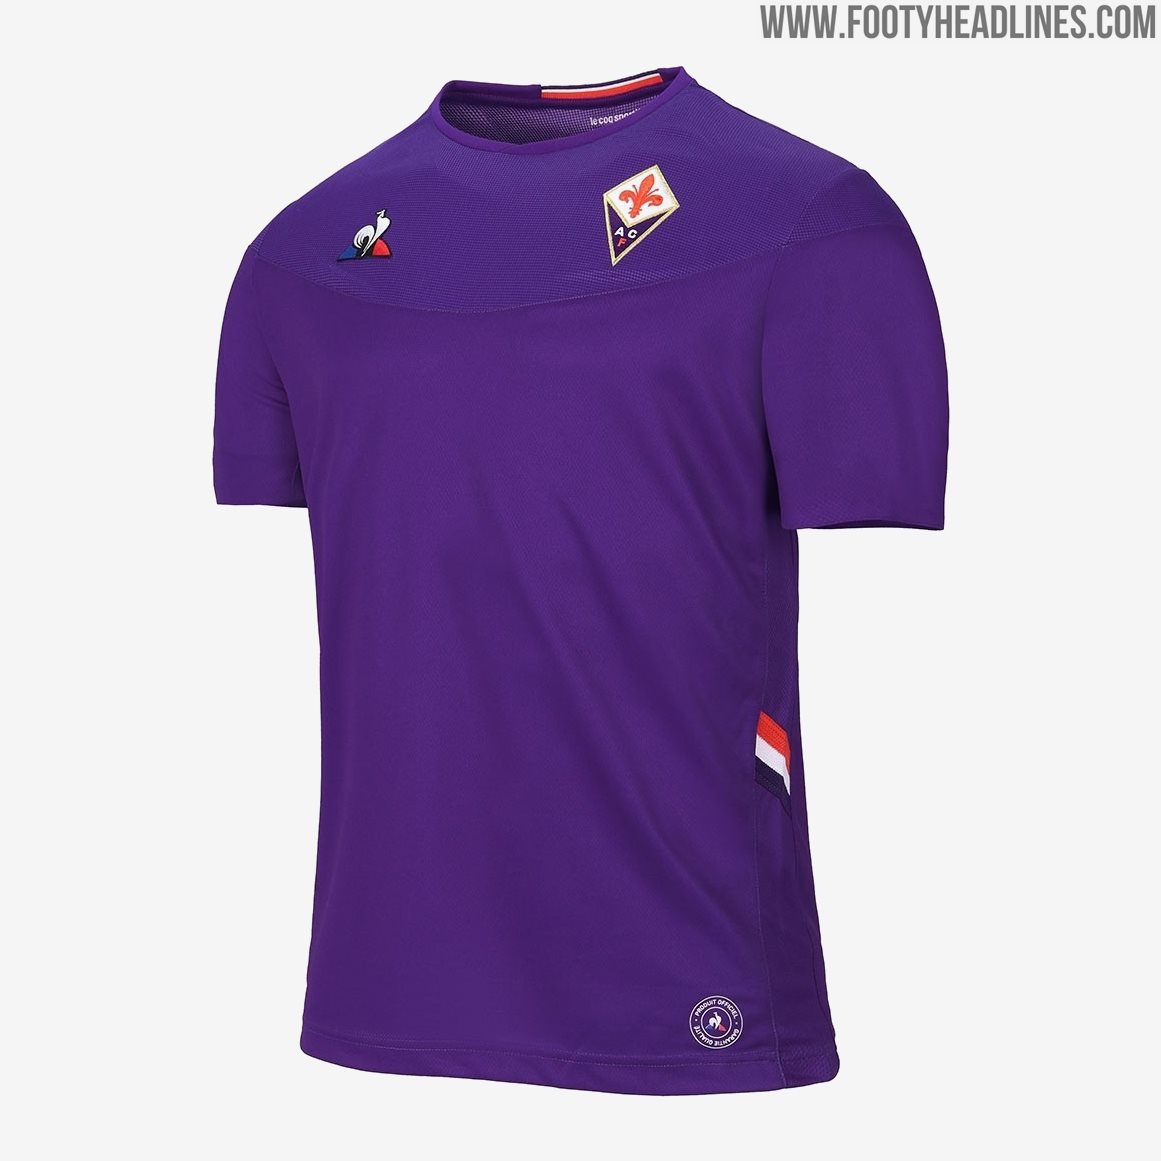 Fiorentina 19-20 Home Kit Released - Footy Headlines